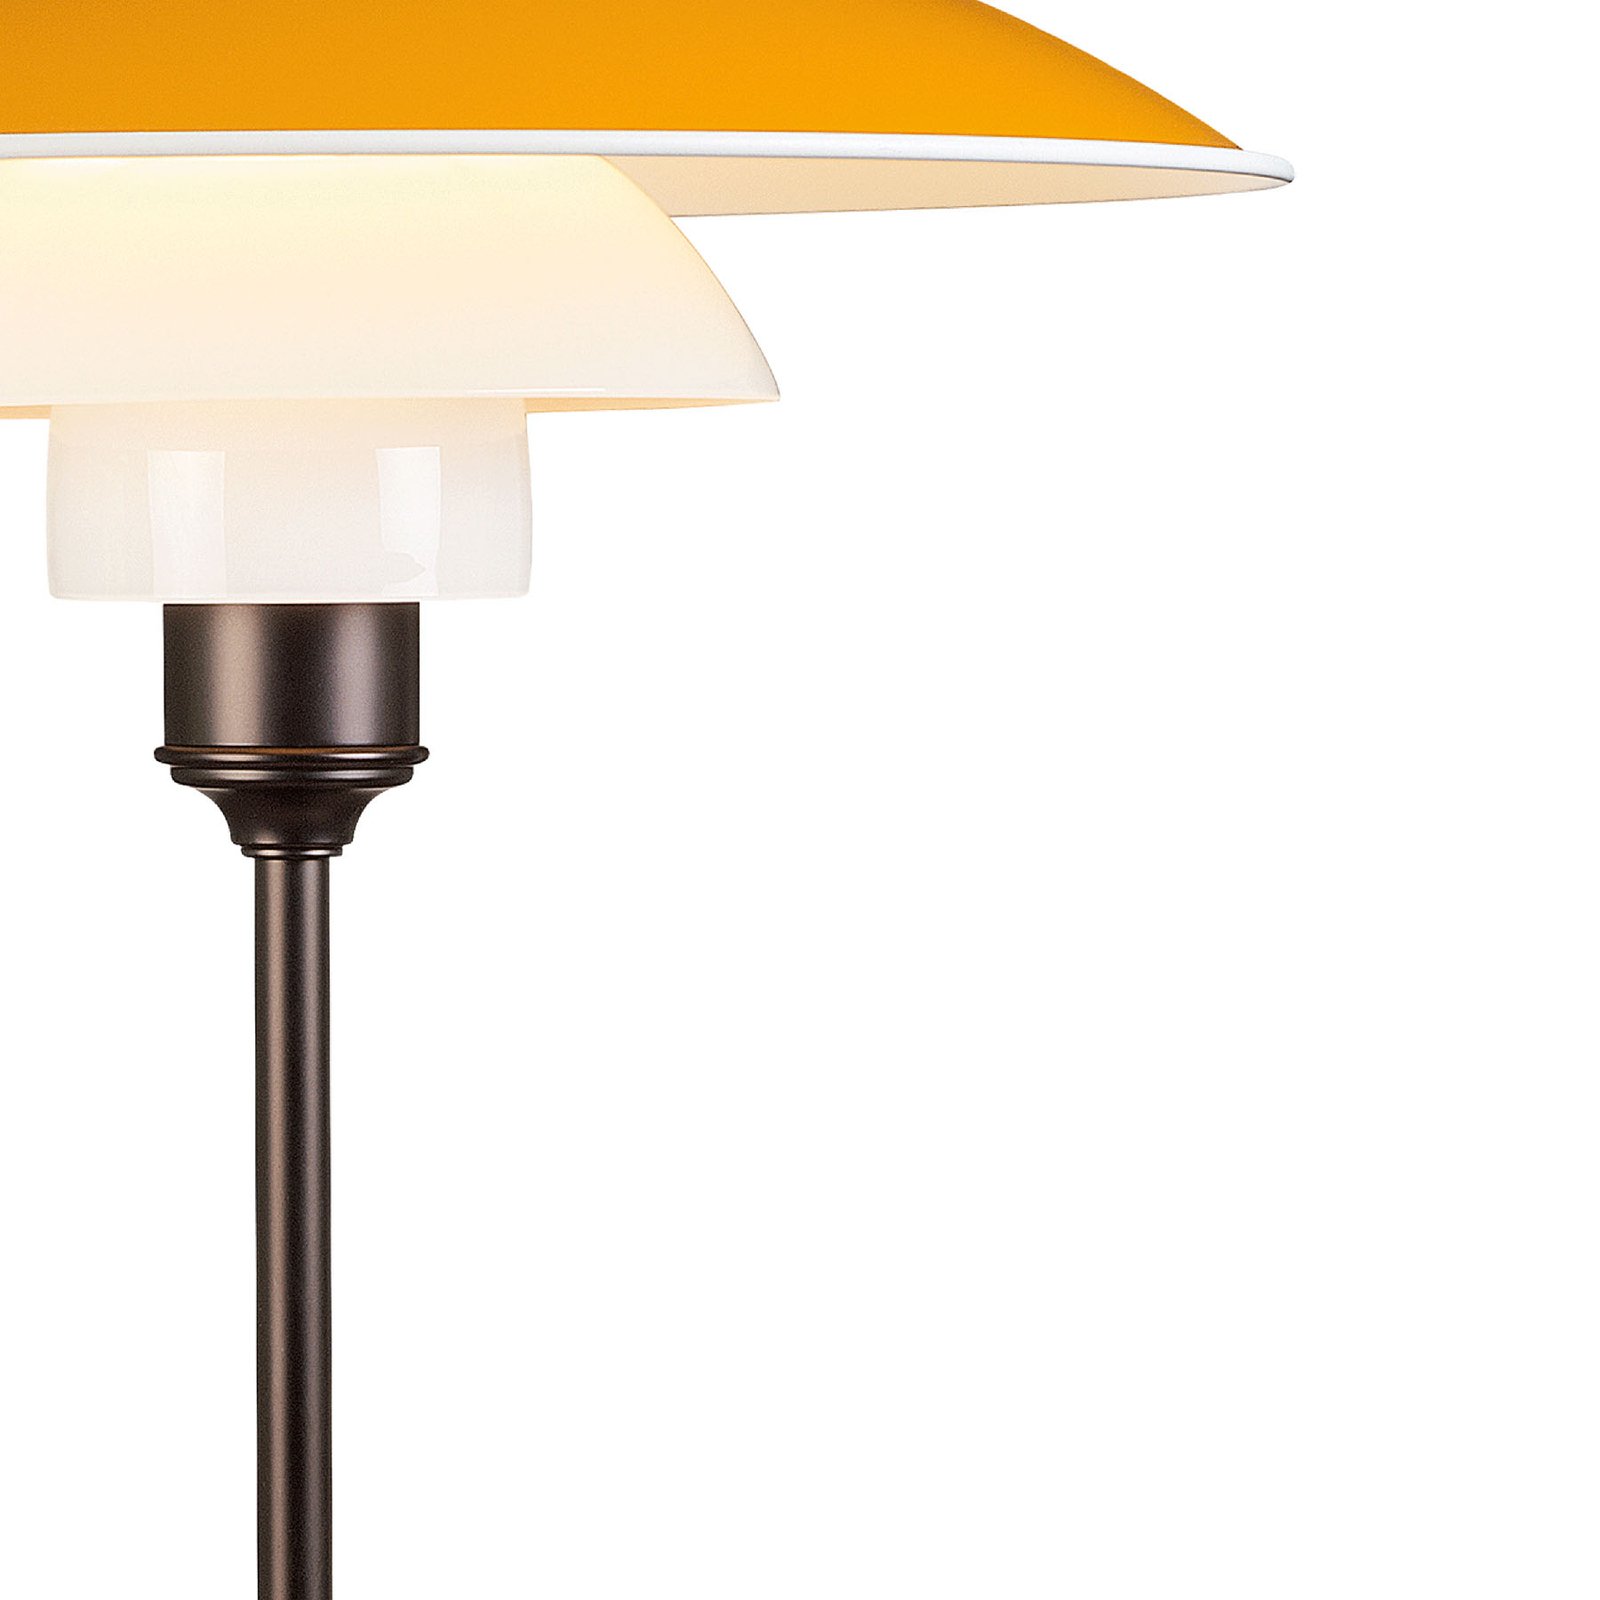 PH 3 1/2-2 1/2 table lamp brown/yellow